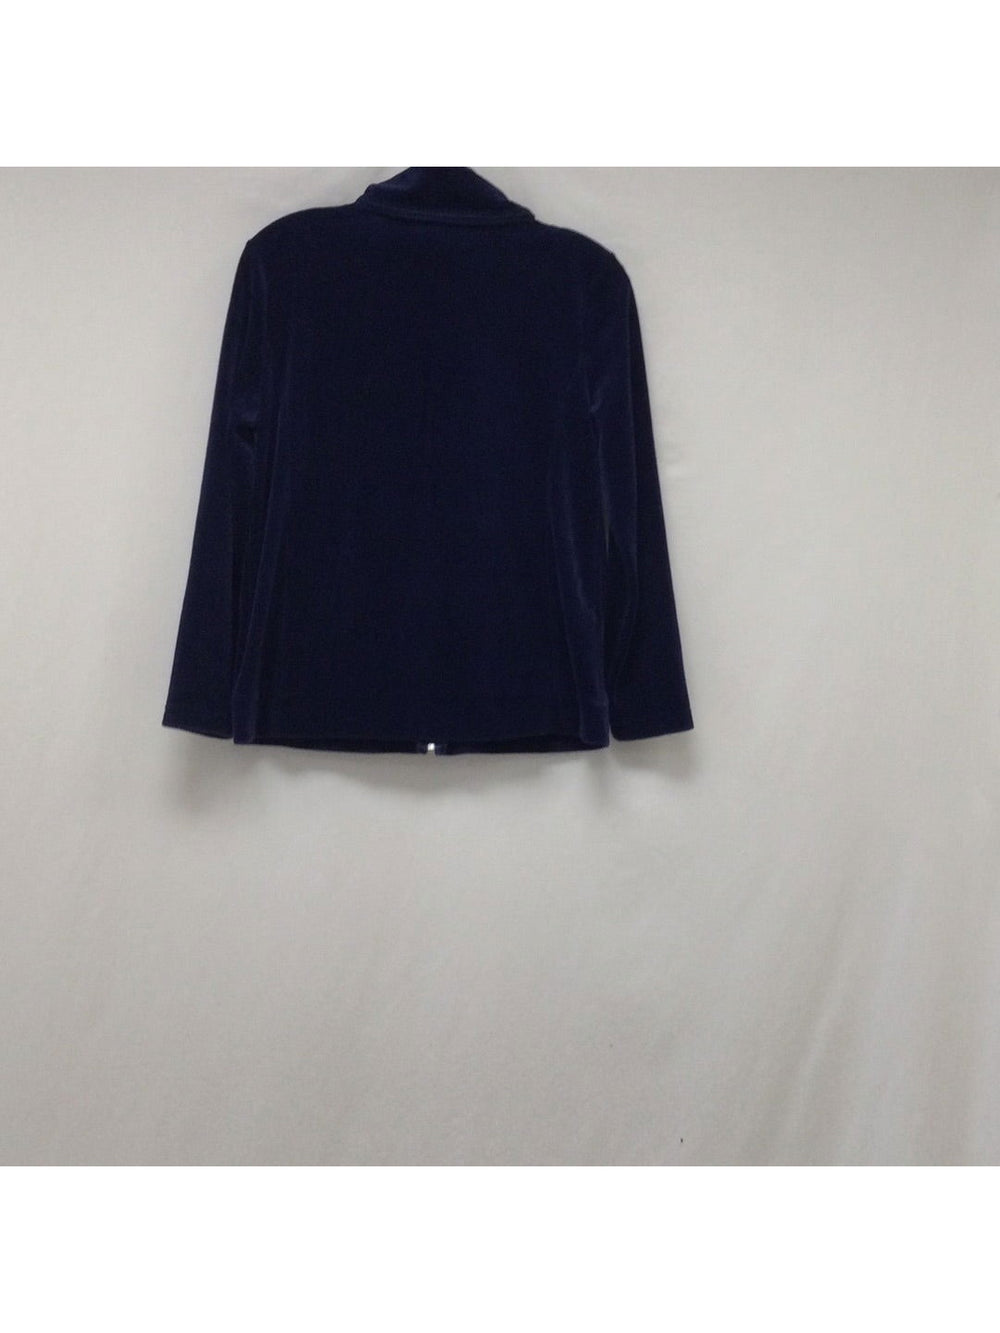 Talbots Women's Small Full-Zip Navy Blue Cotton Sweatshirt - The Kennedy Collective Thrift - 